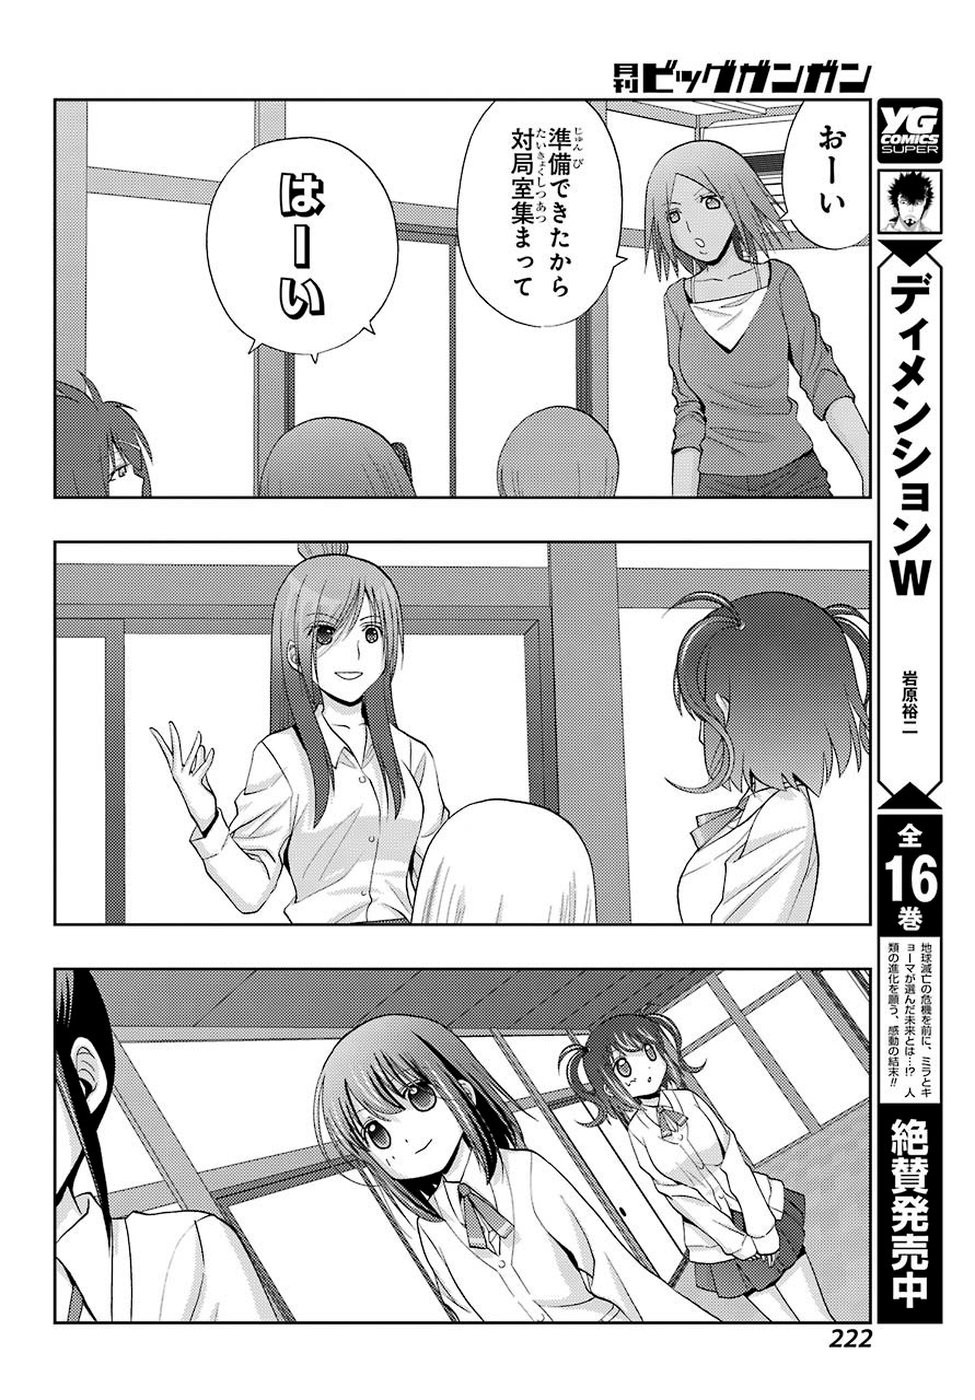 Shinohayu - The Dawn of Age Manga - Chapter 073 - Page 22